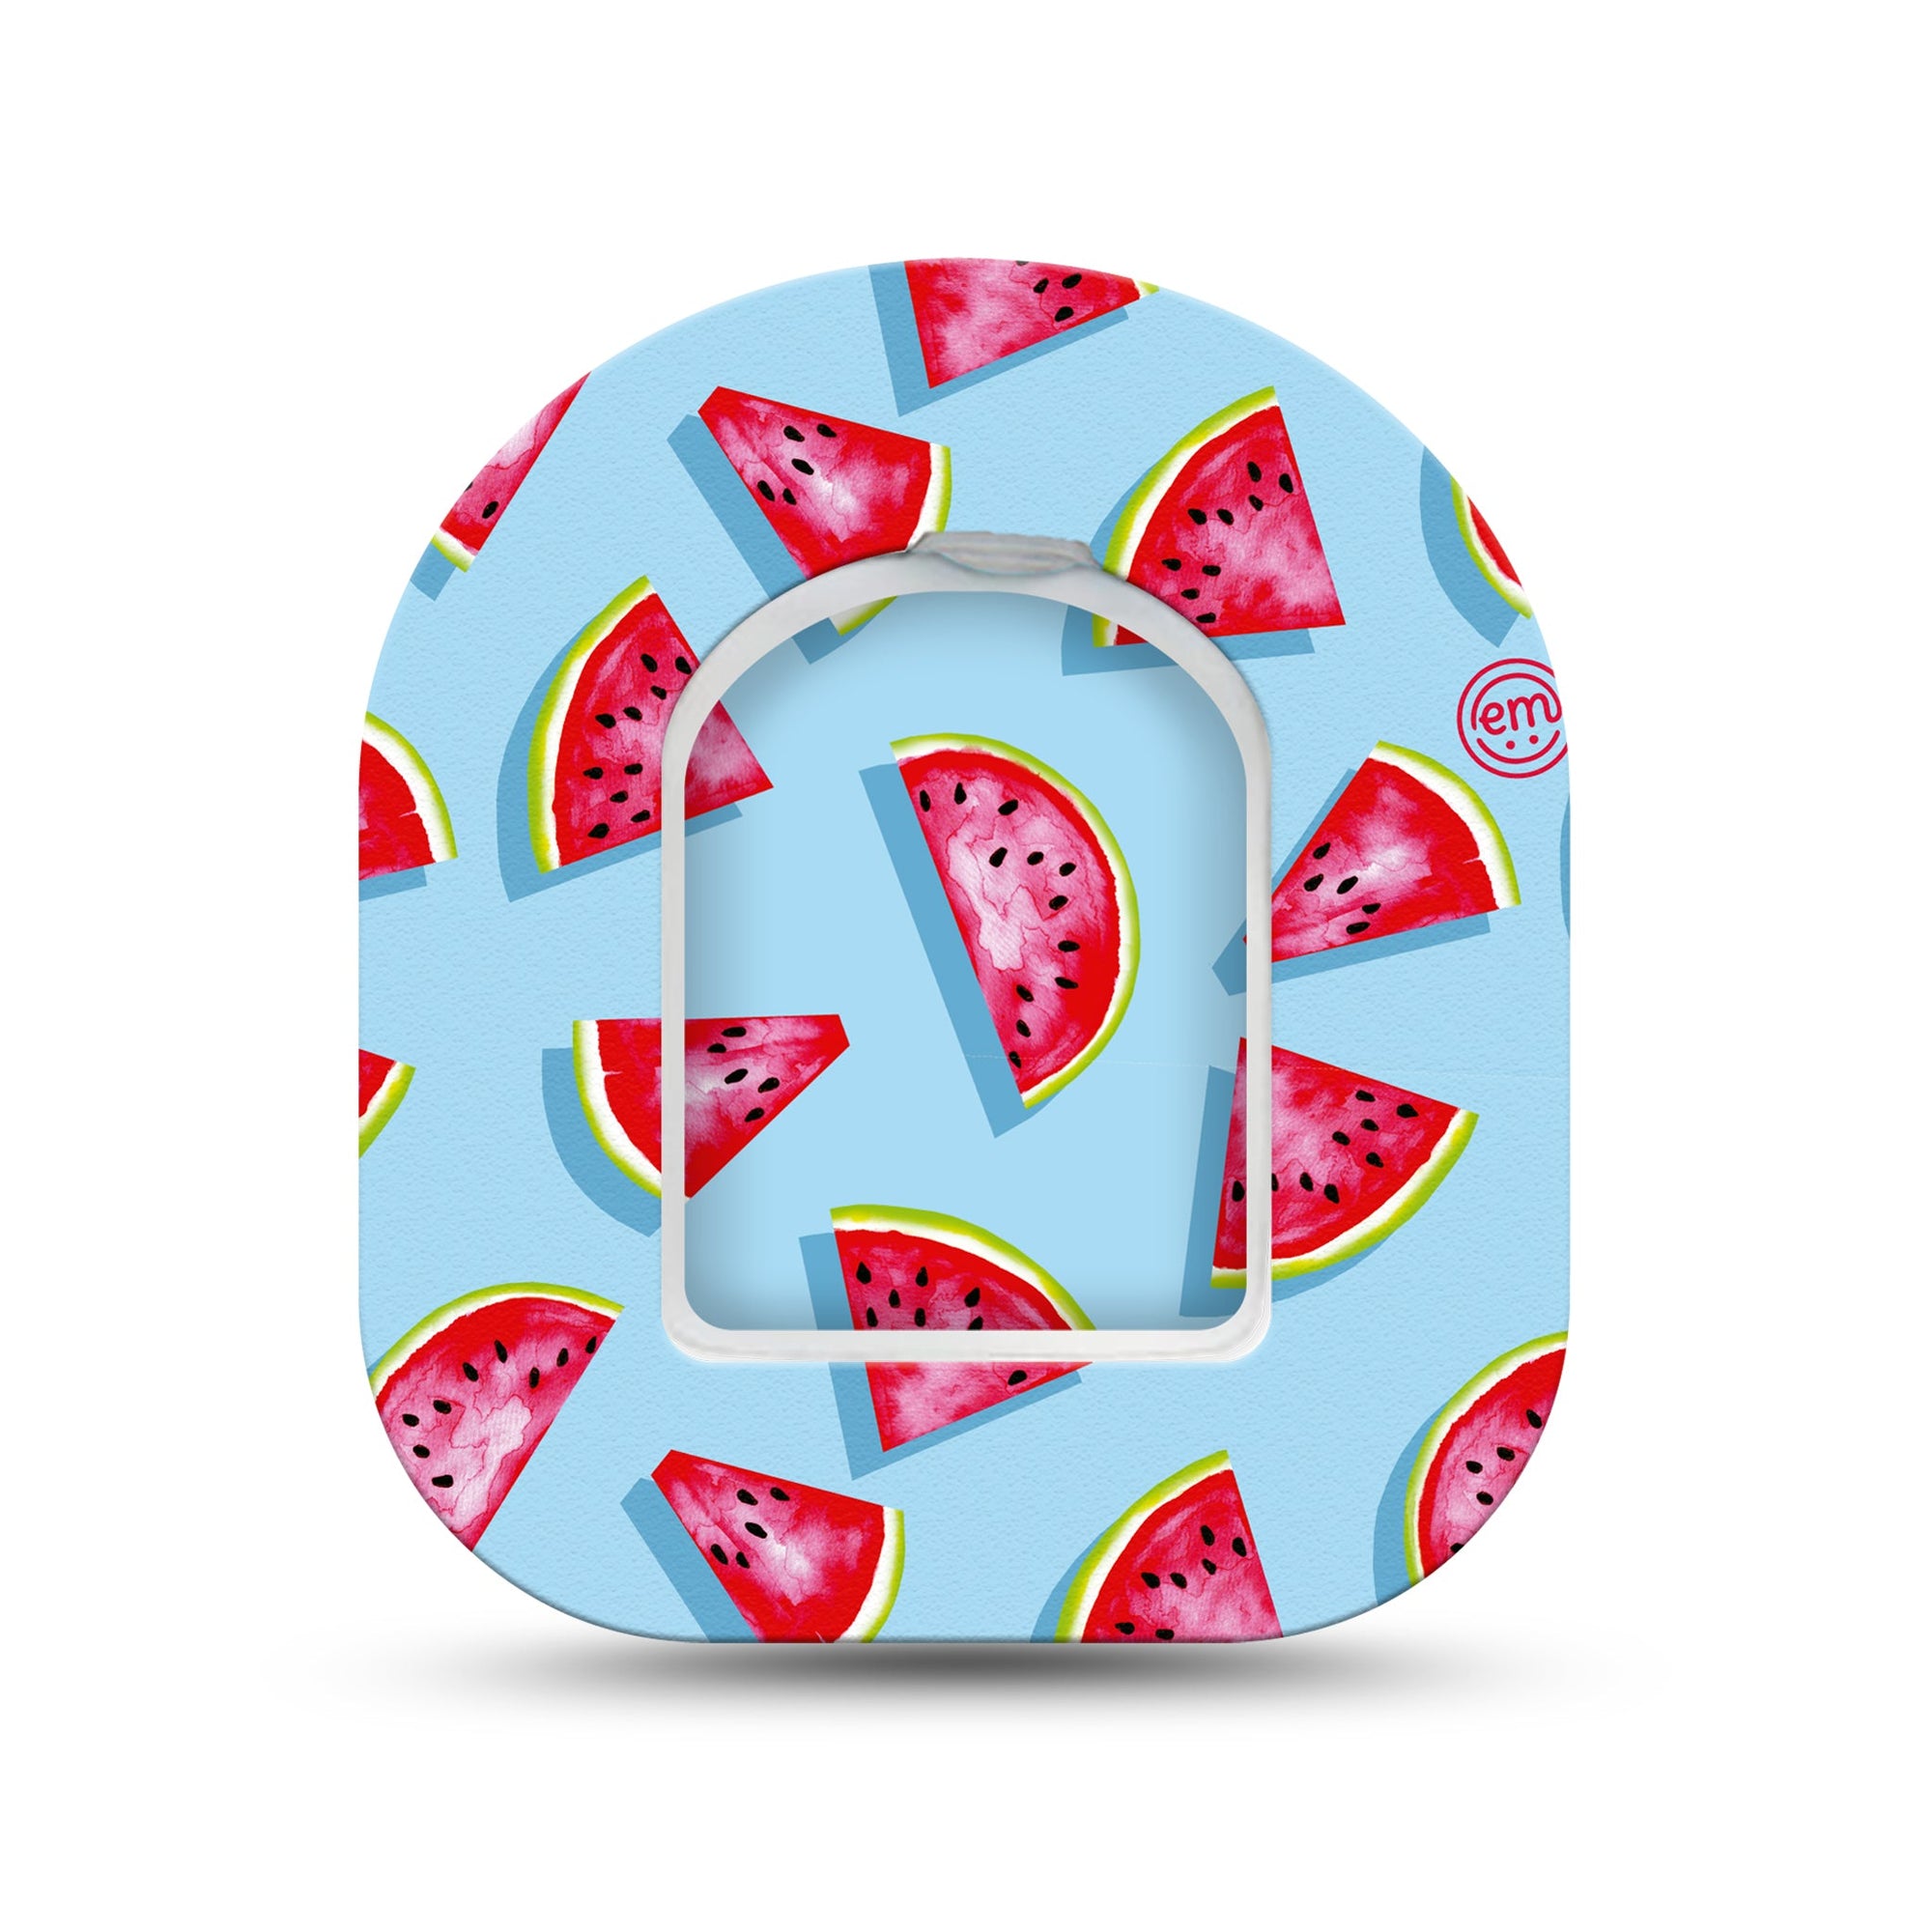 ExpressionMed Watermelon Slices Pod Mini Tape Single Sticker and Single Tape, Refreshing Snack Plaster Pump Design